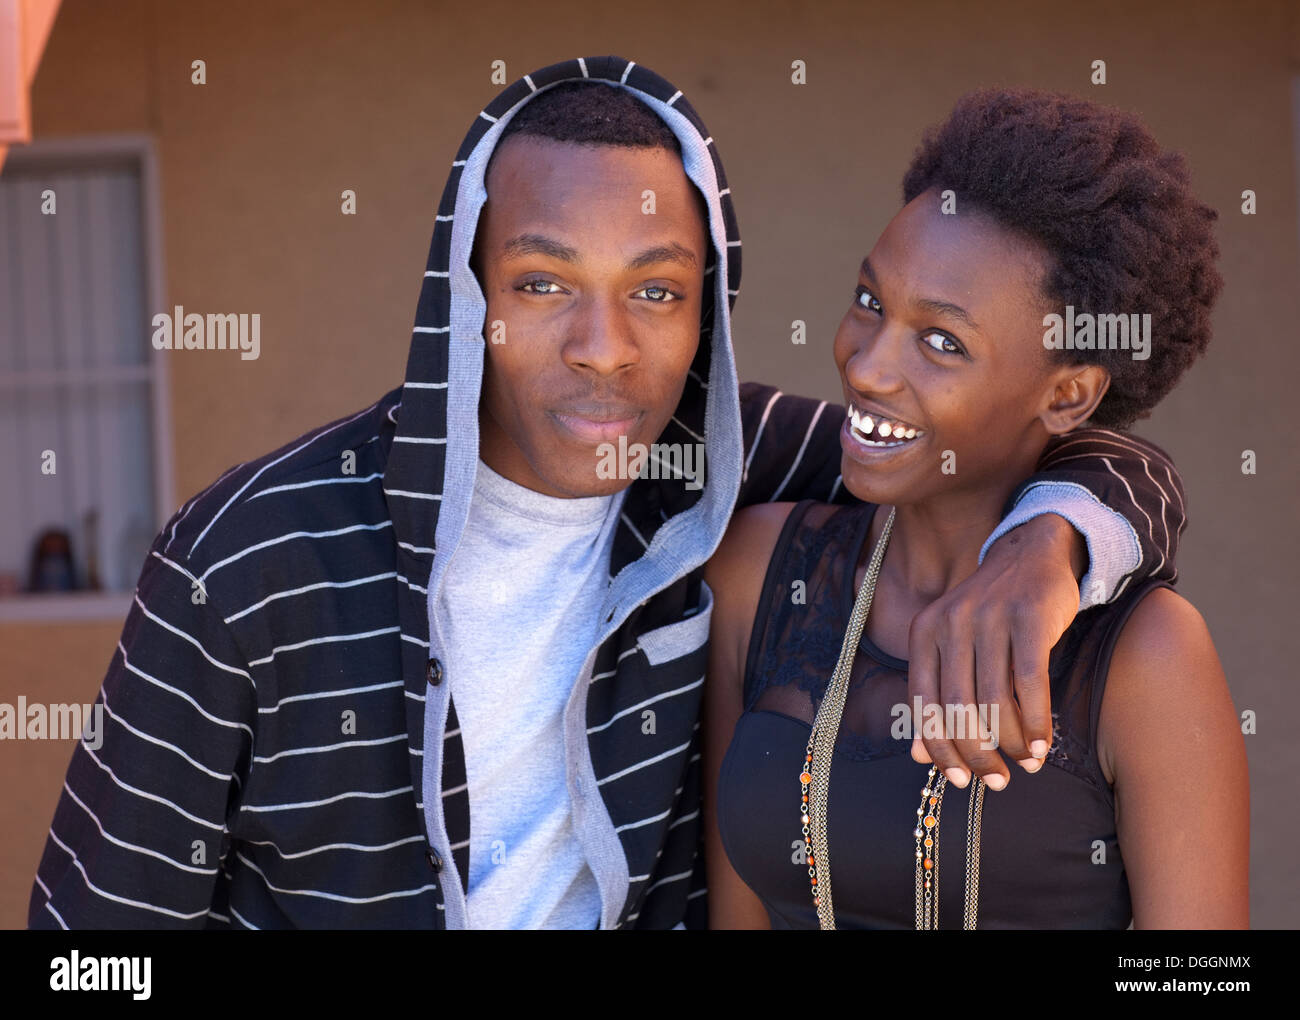 Brother and sister from Rwanda smiling at the camera. Stock Photo